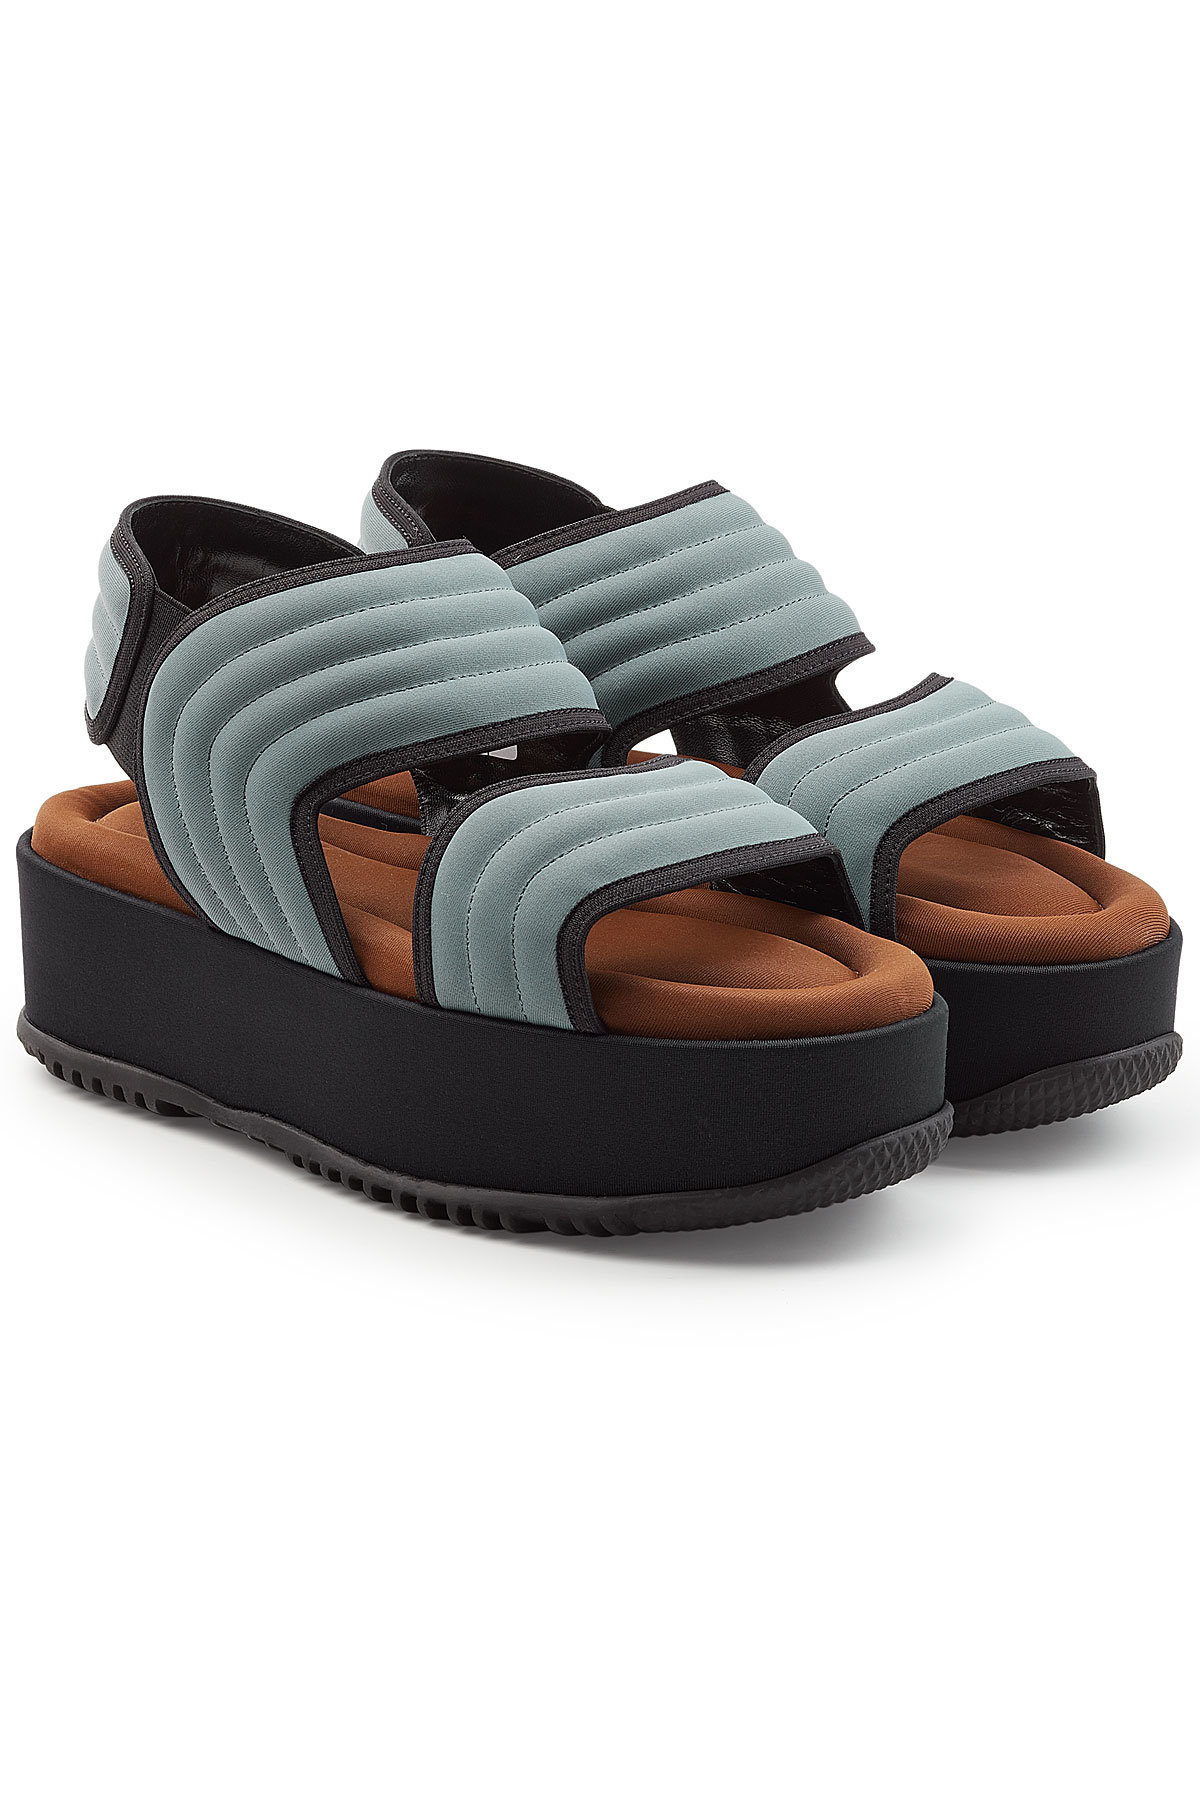 Marni - Sandals with Platform